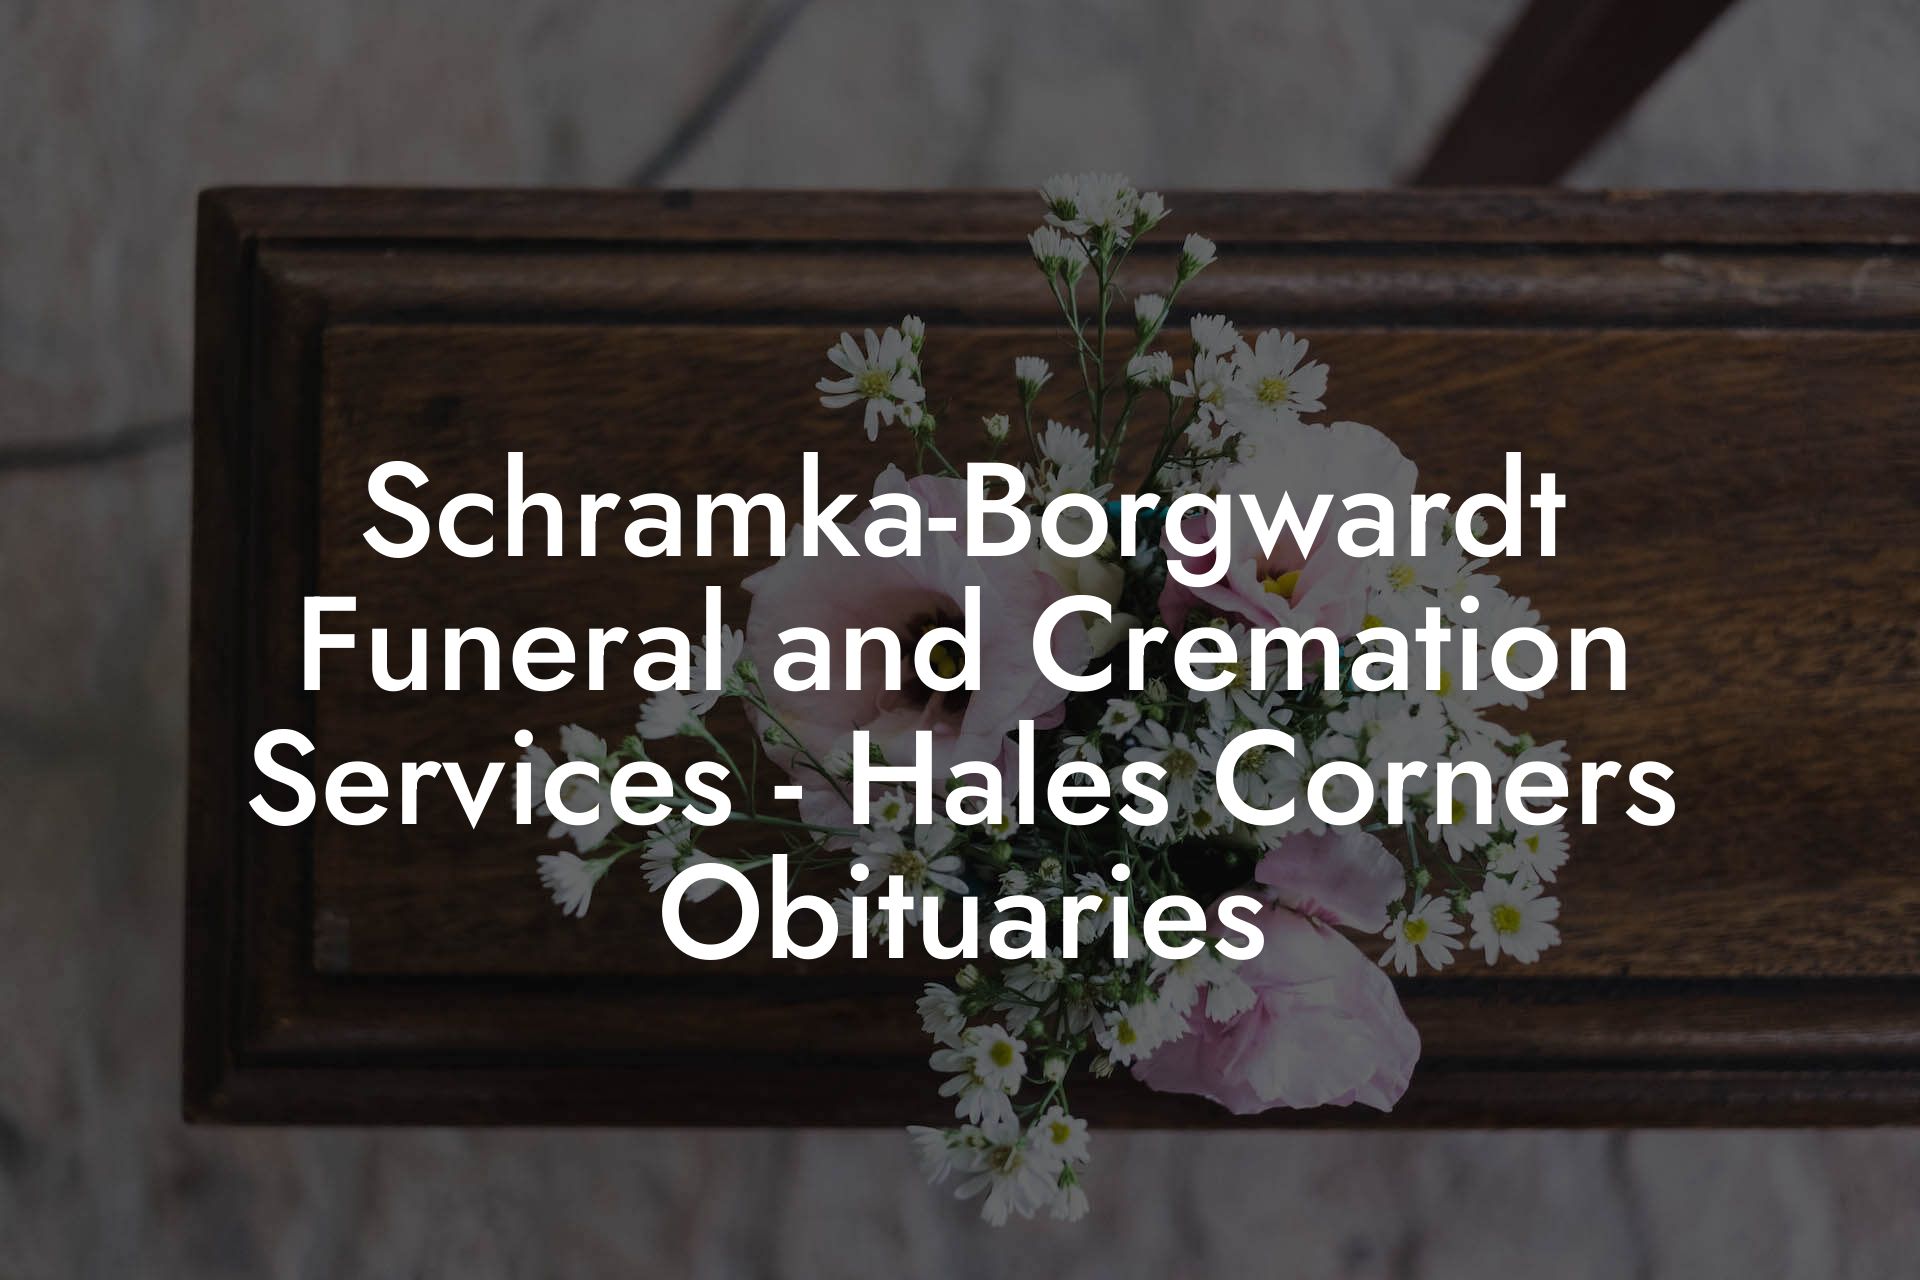 Schramka-Borgwardt Funeral and Cremation Services - Hales Corners Obituaries